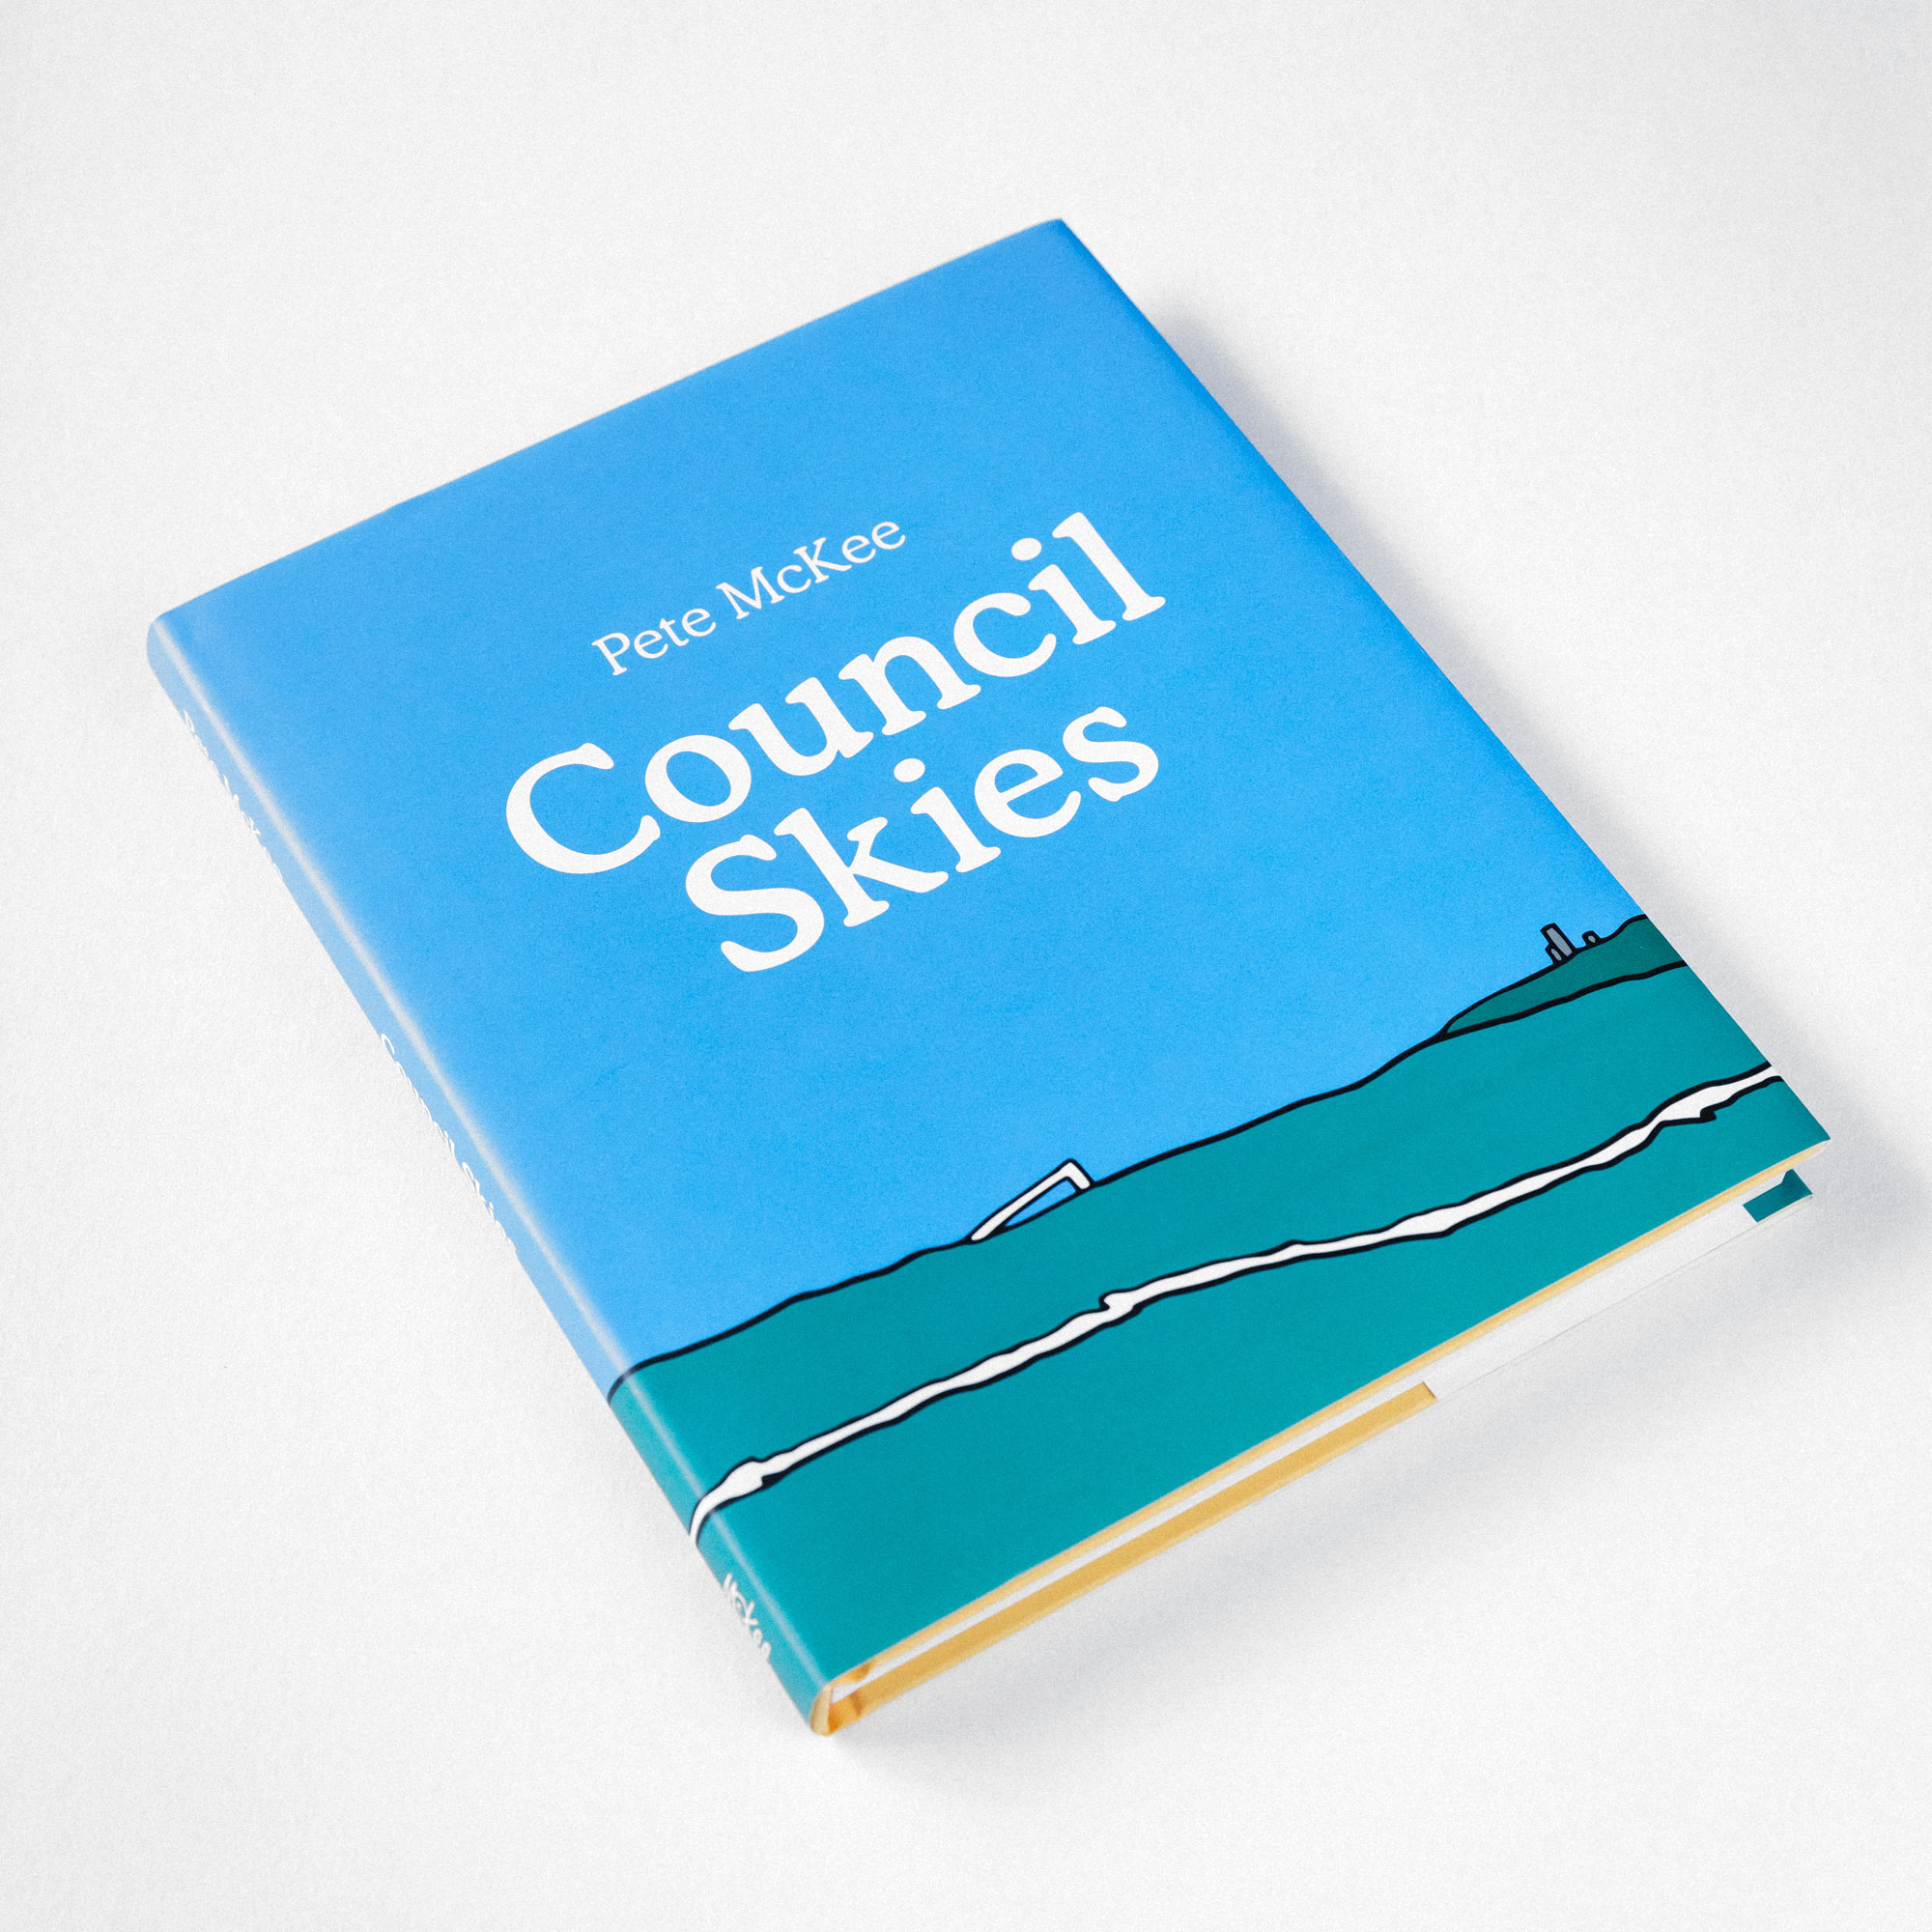 Council Skies Book